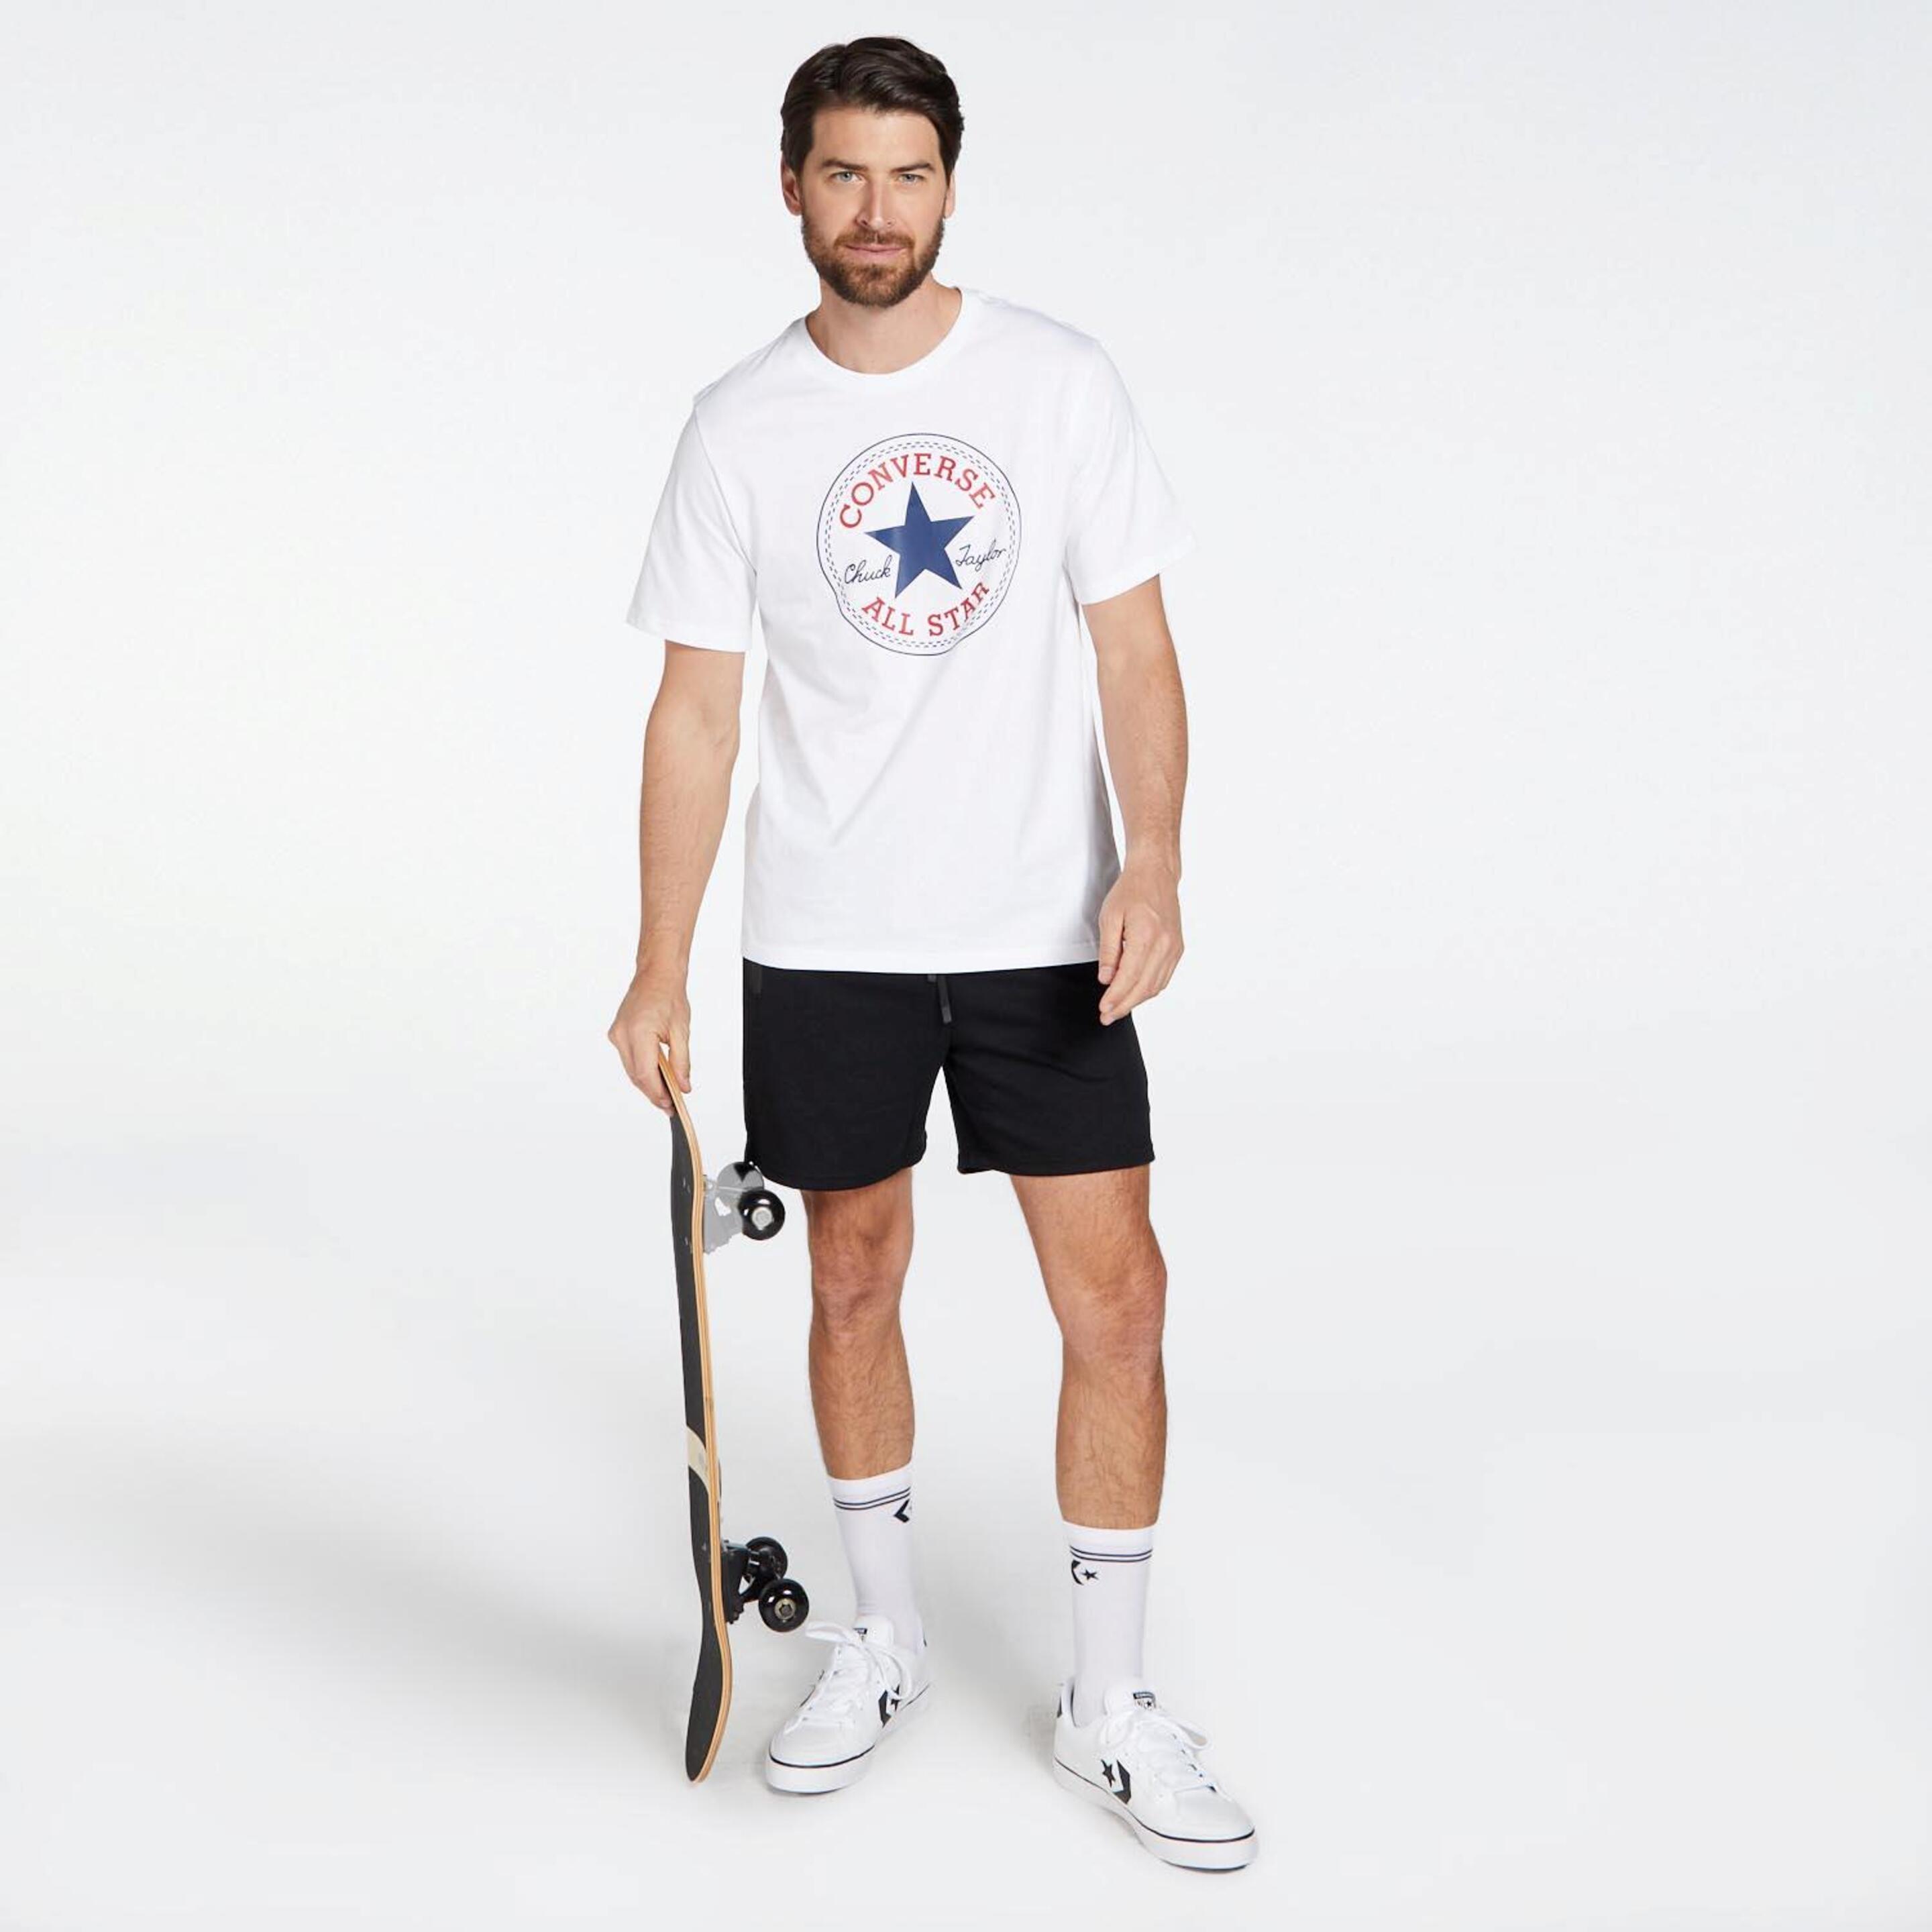 Converse All Star - Blanco - Camiseta Hombre